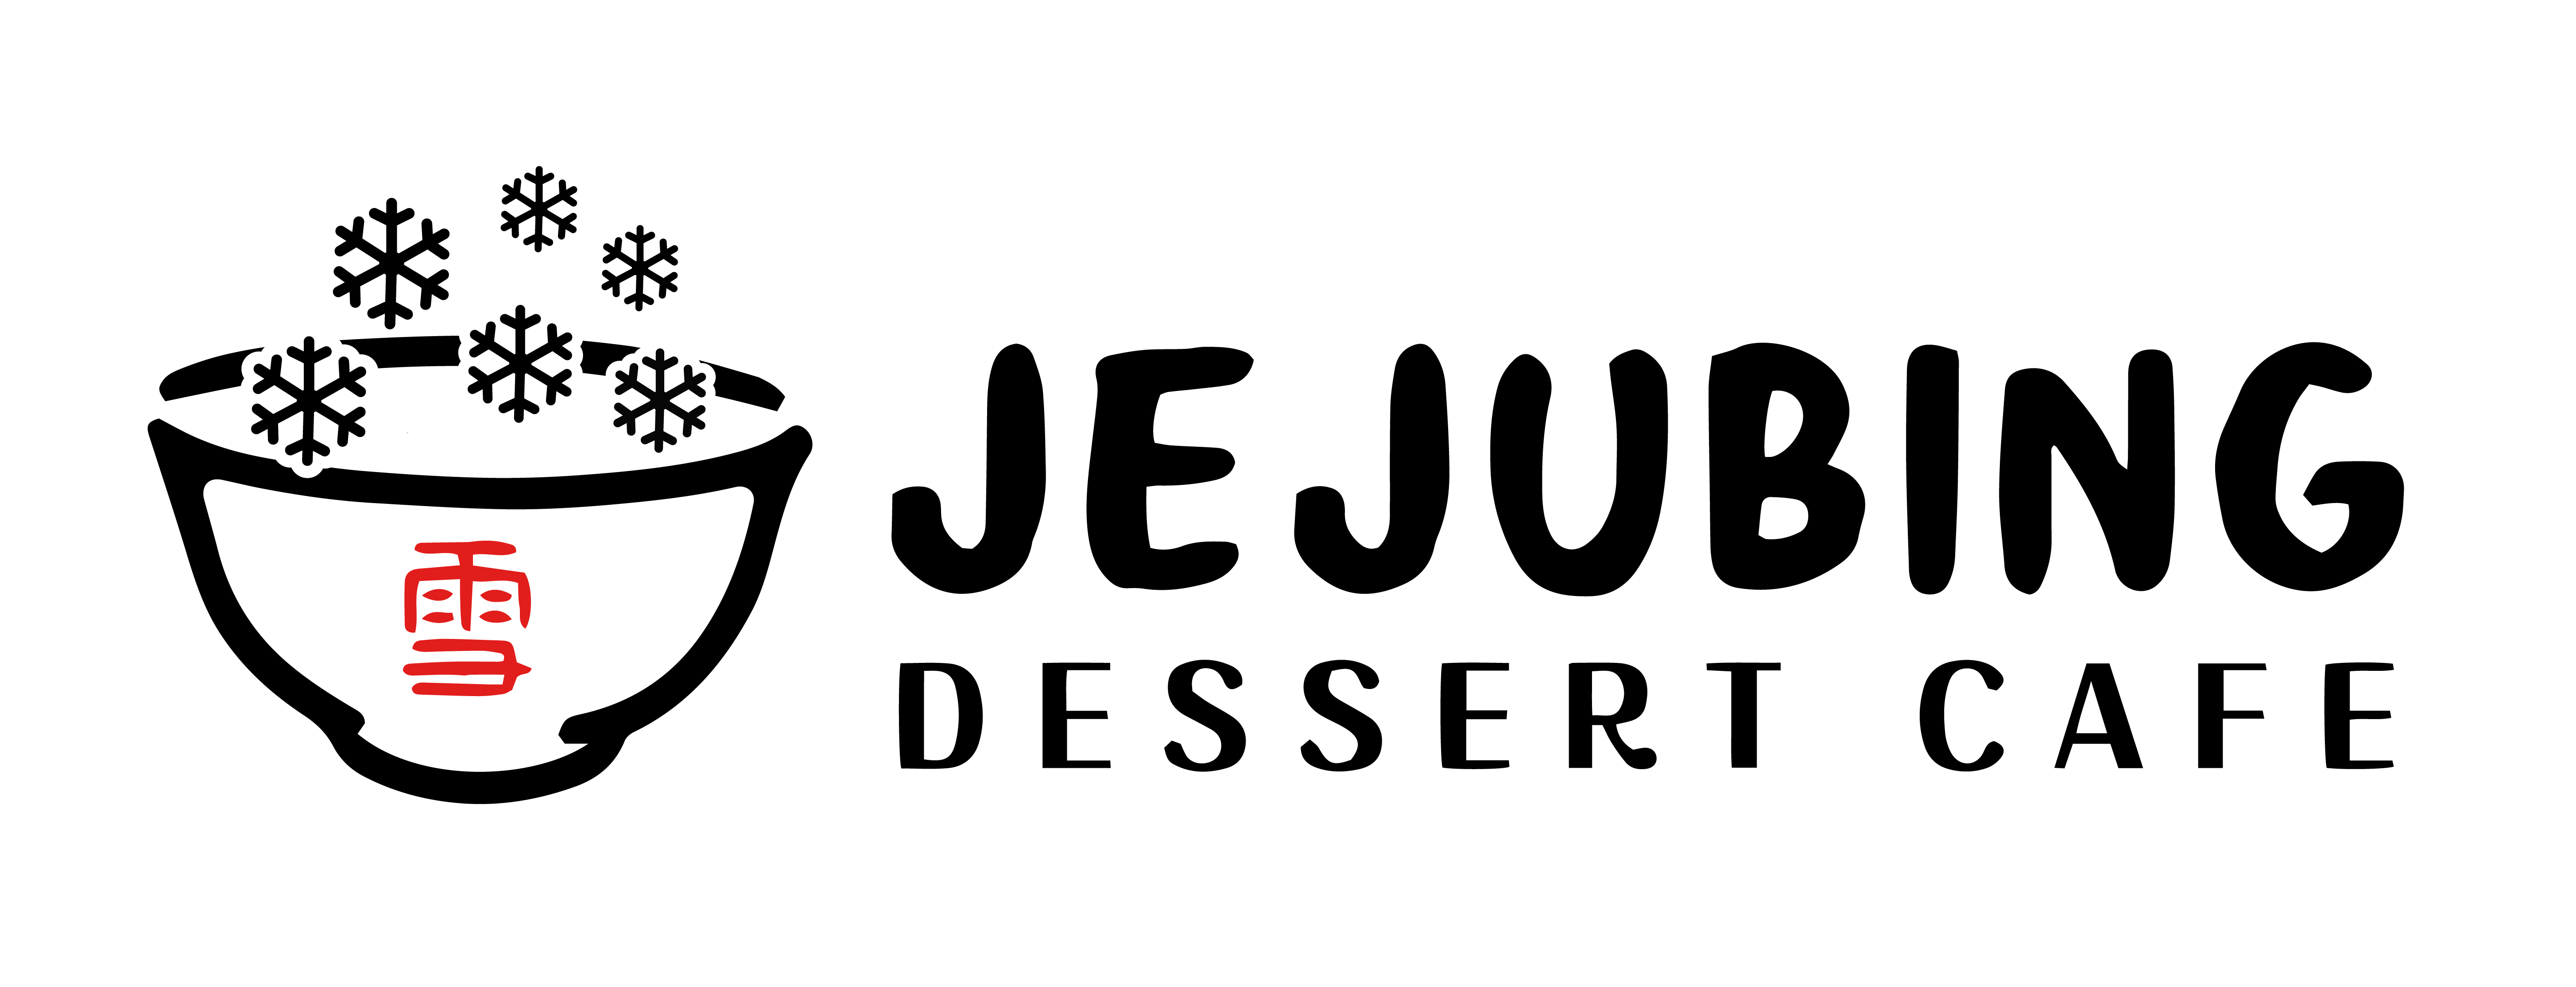 Jejubing Dessert Cafe